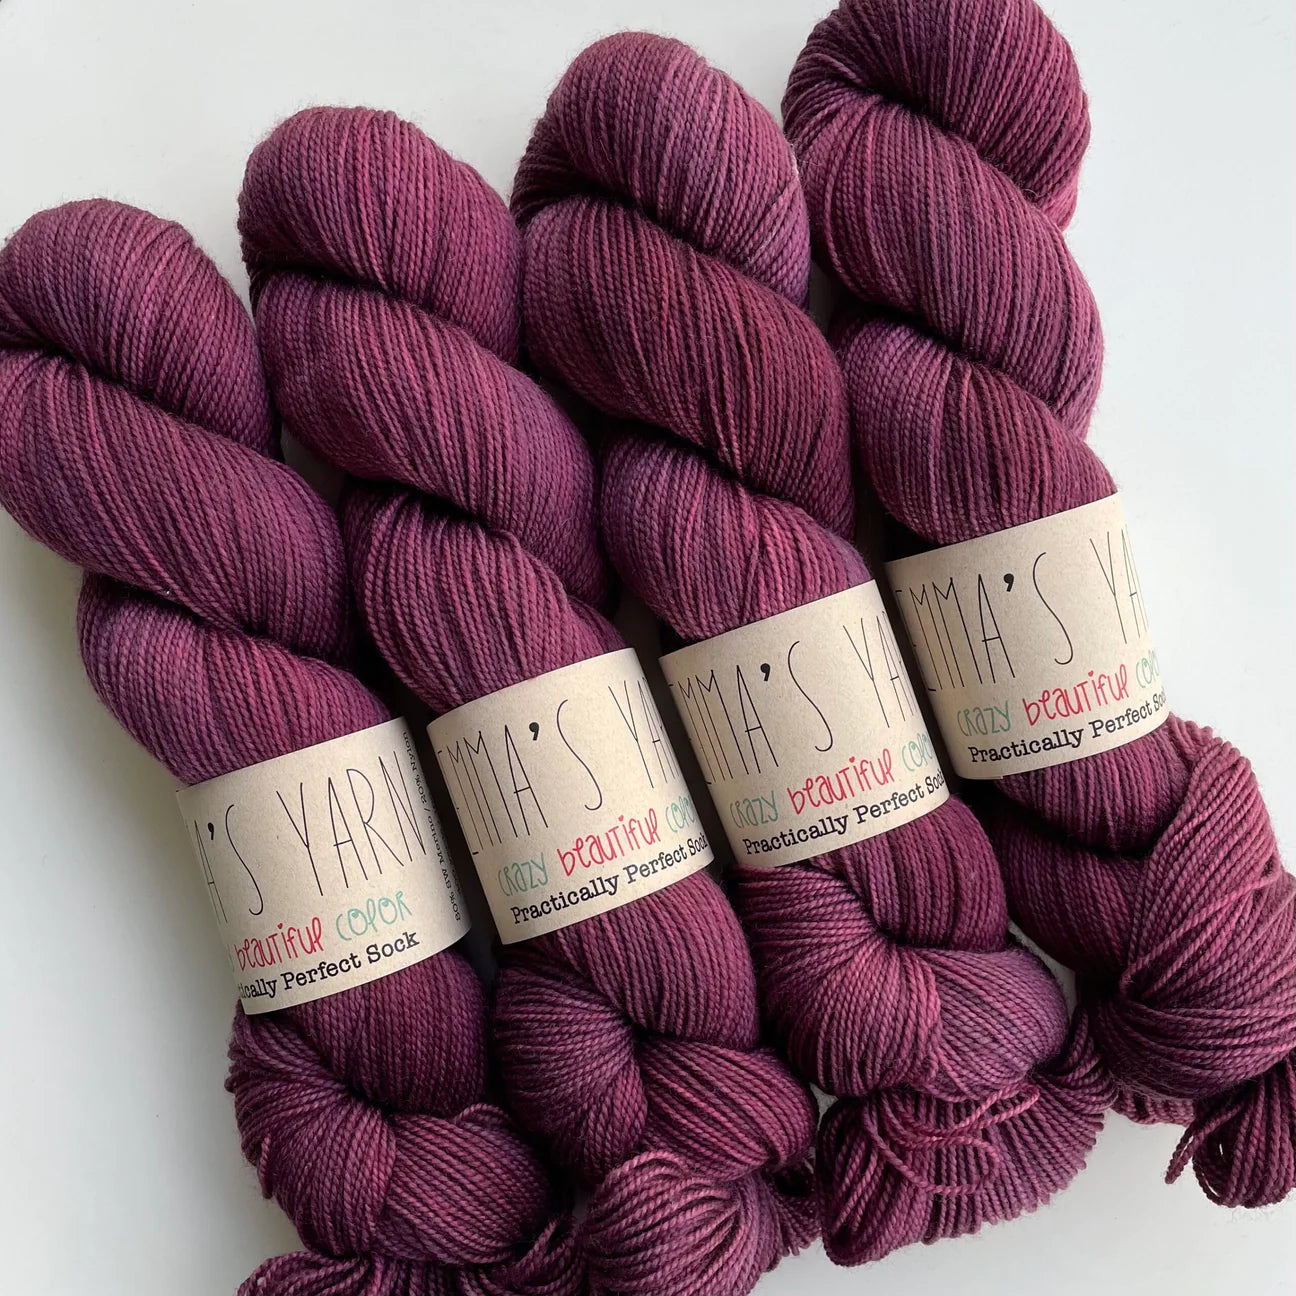 Emmas yarn; Practically perfect Sock; Cherry Merlot